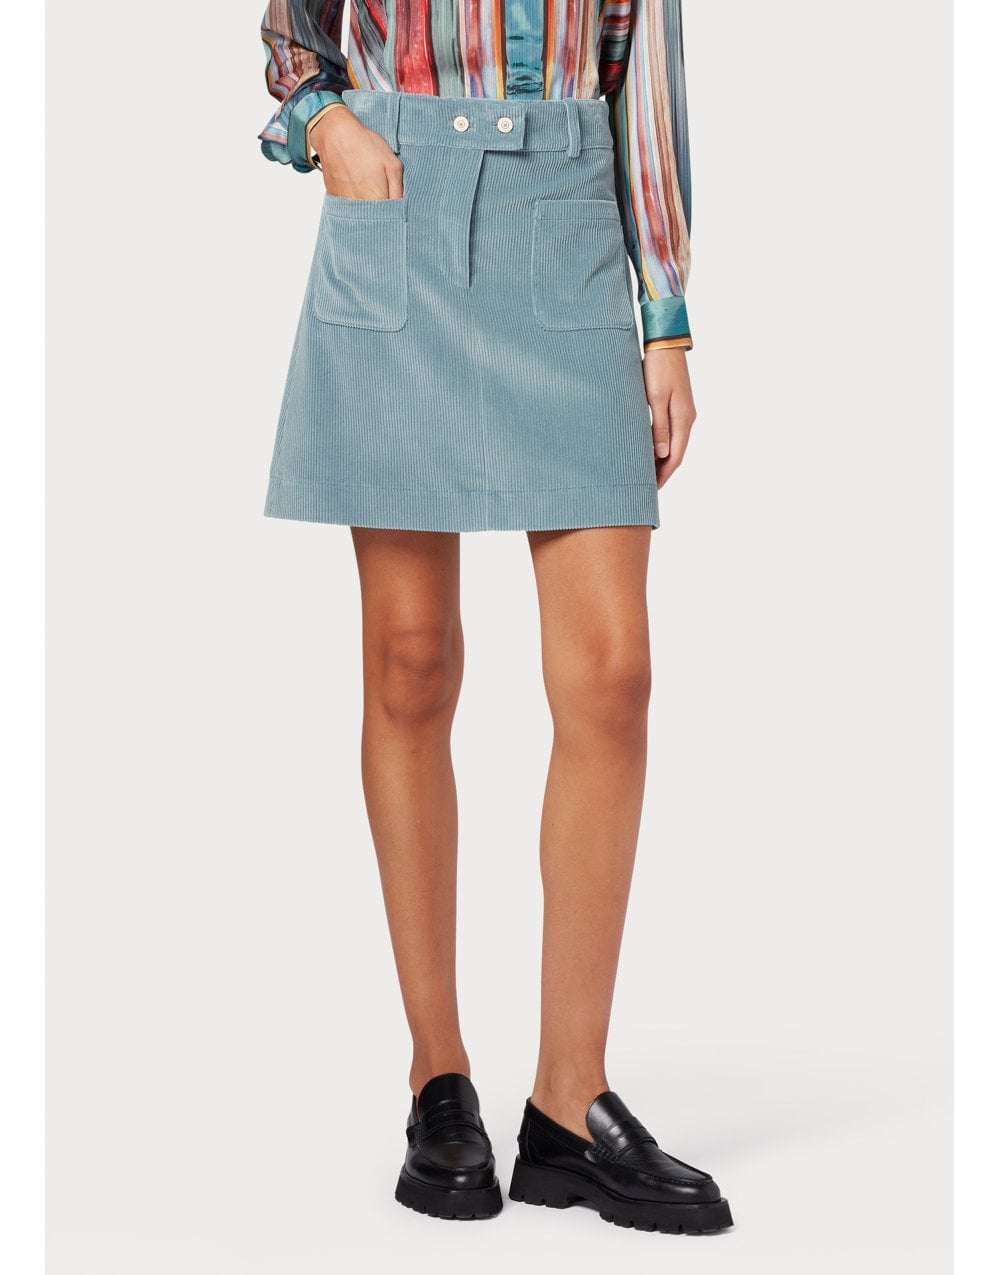 Paul Smith Cord Mini Skirt Size: 10, Col: Blue